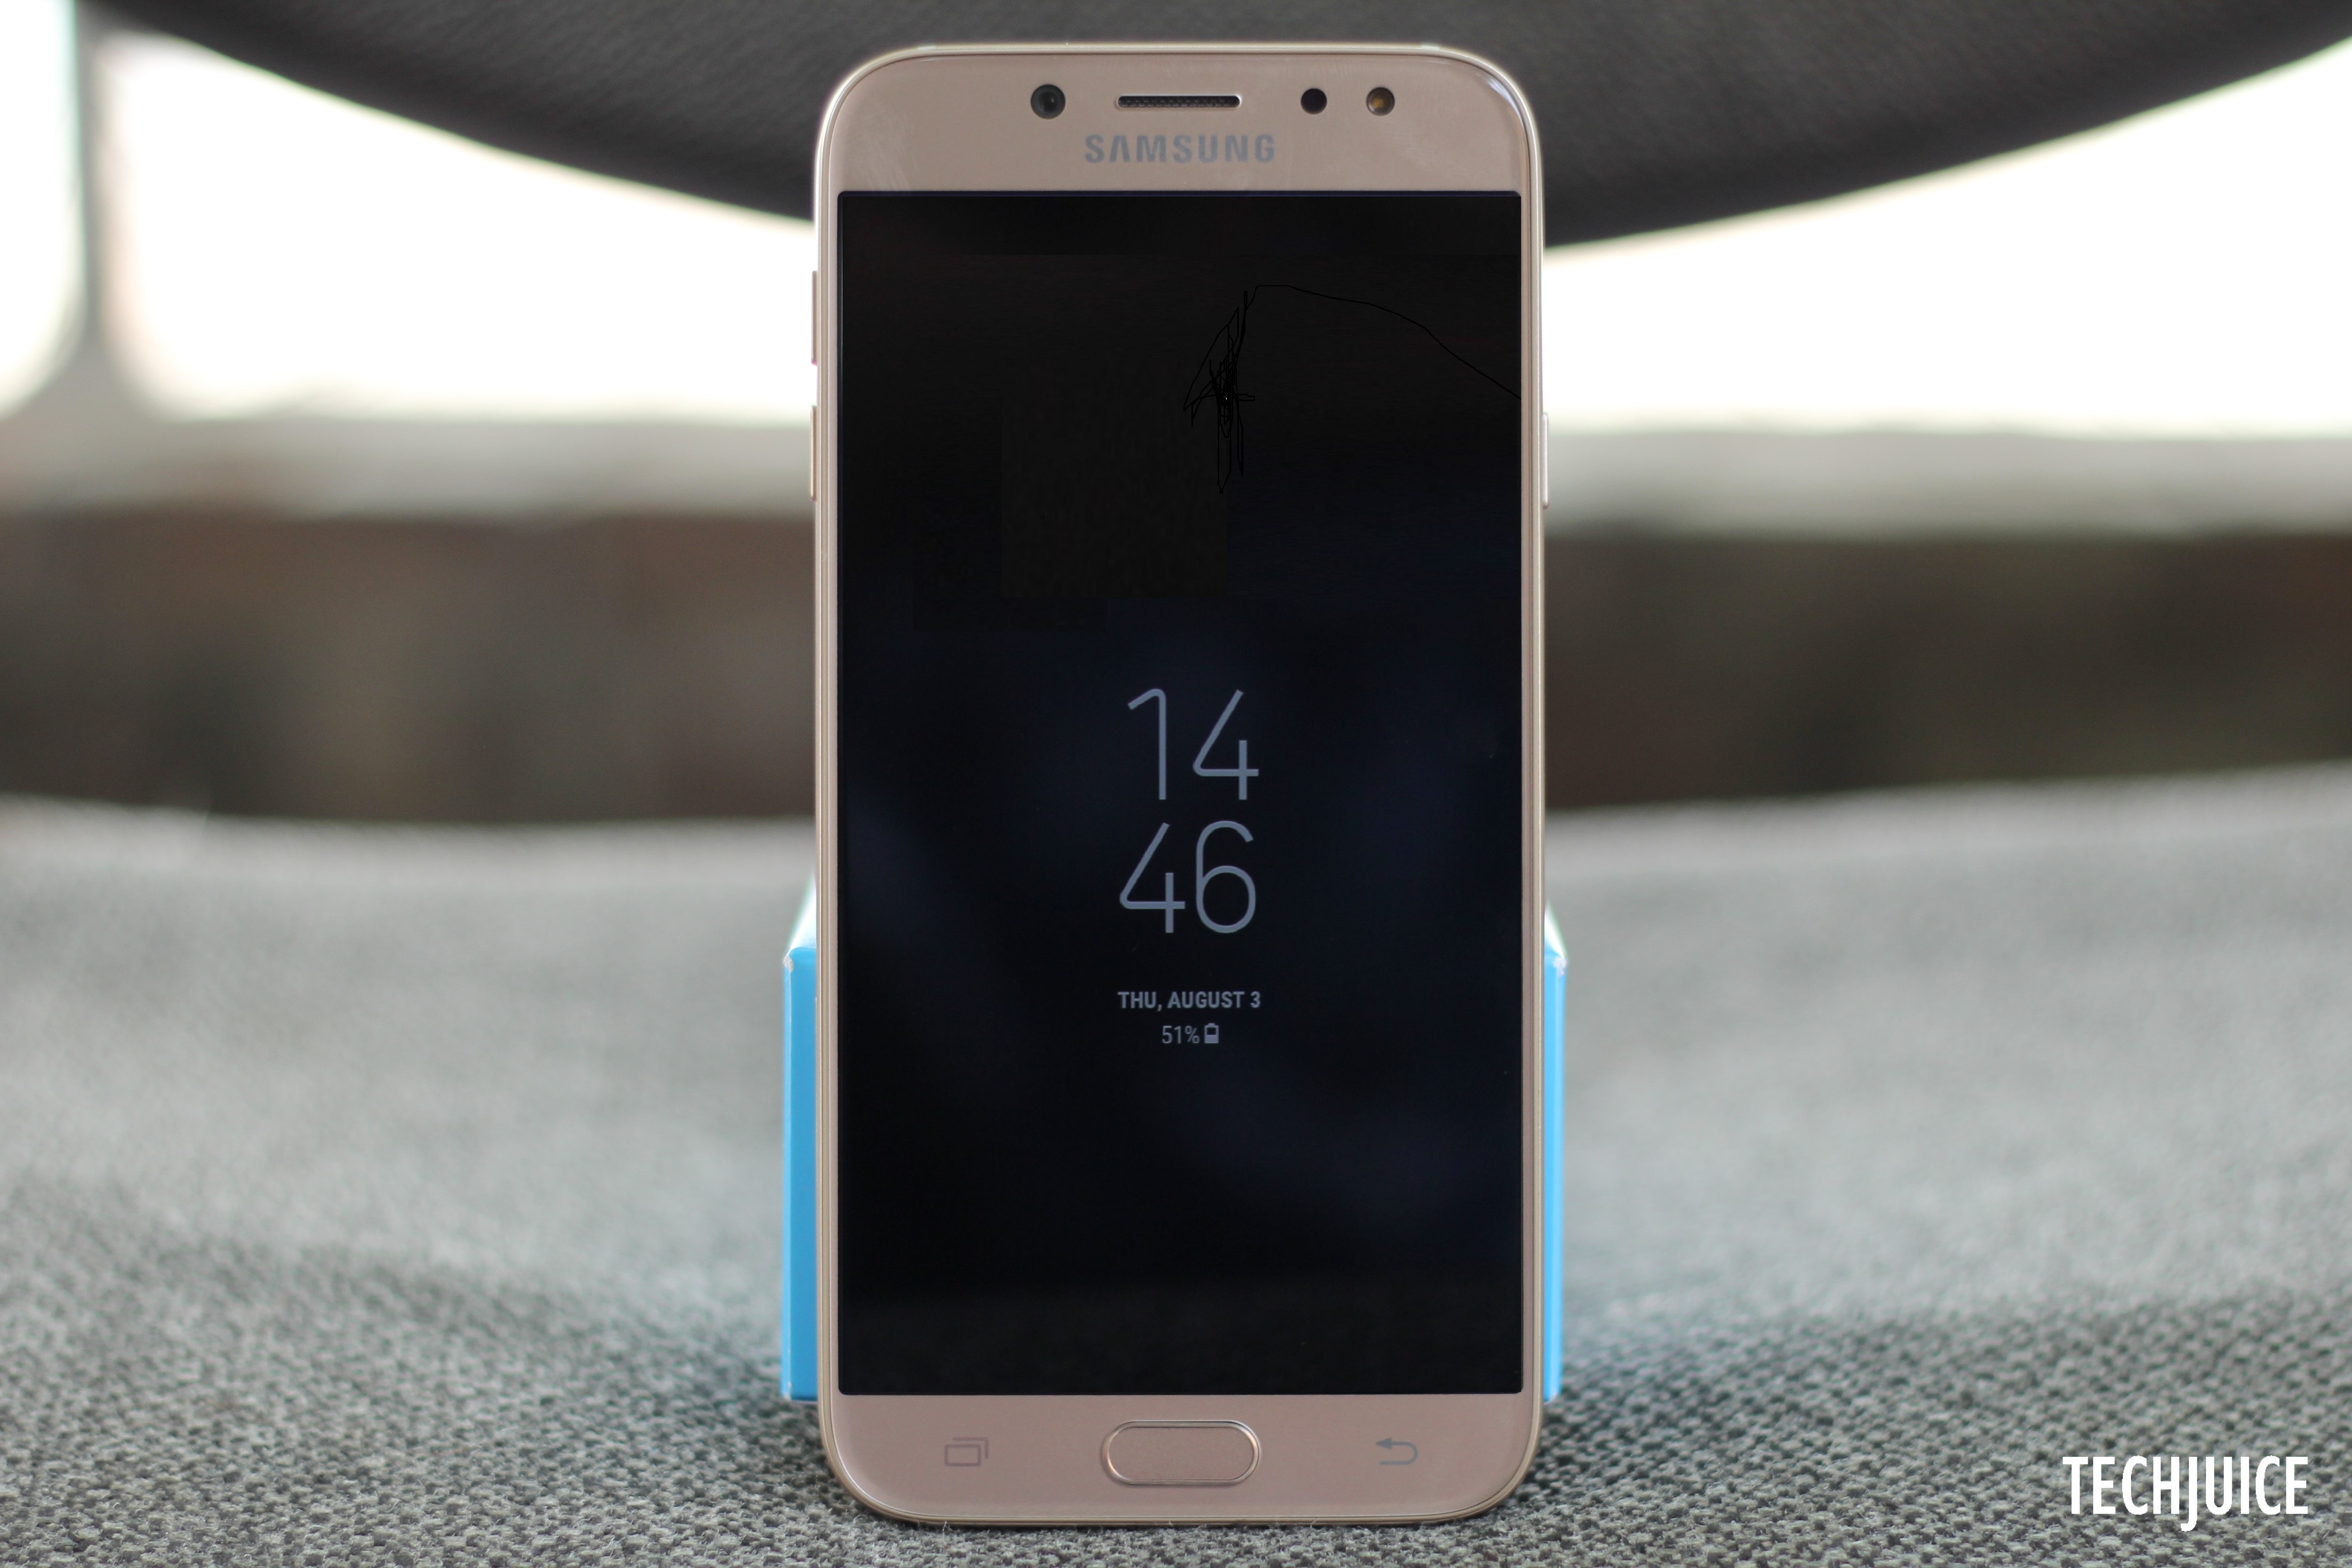 Samsung Galaxy J7 Pro review